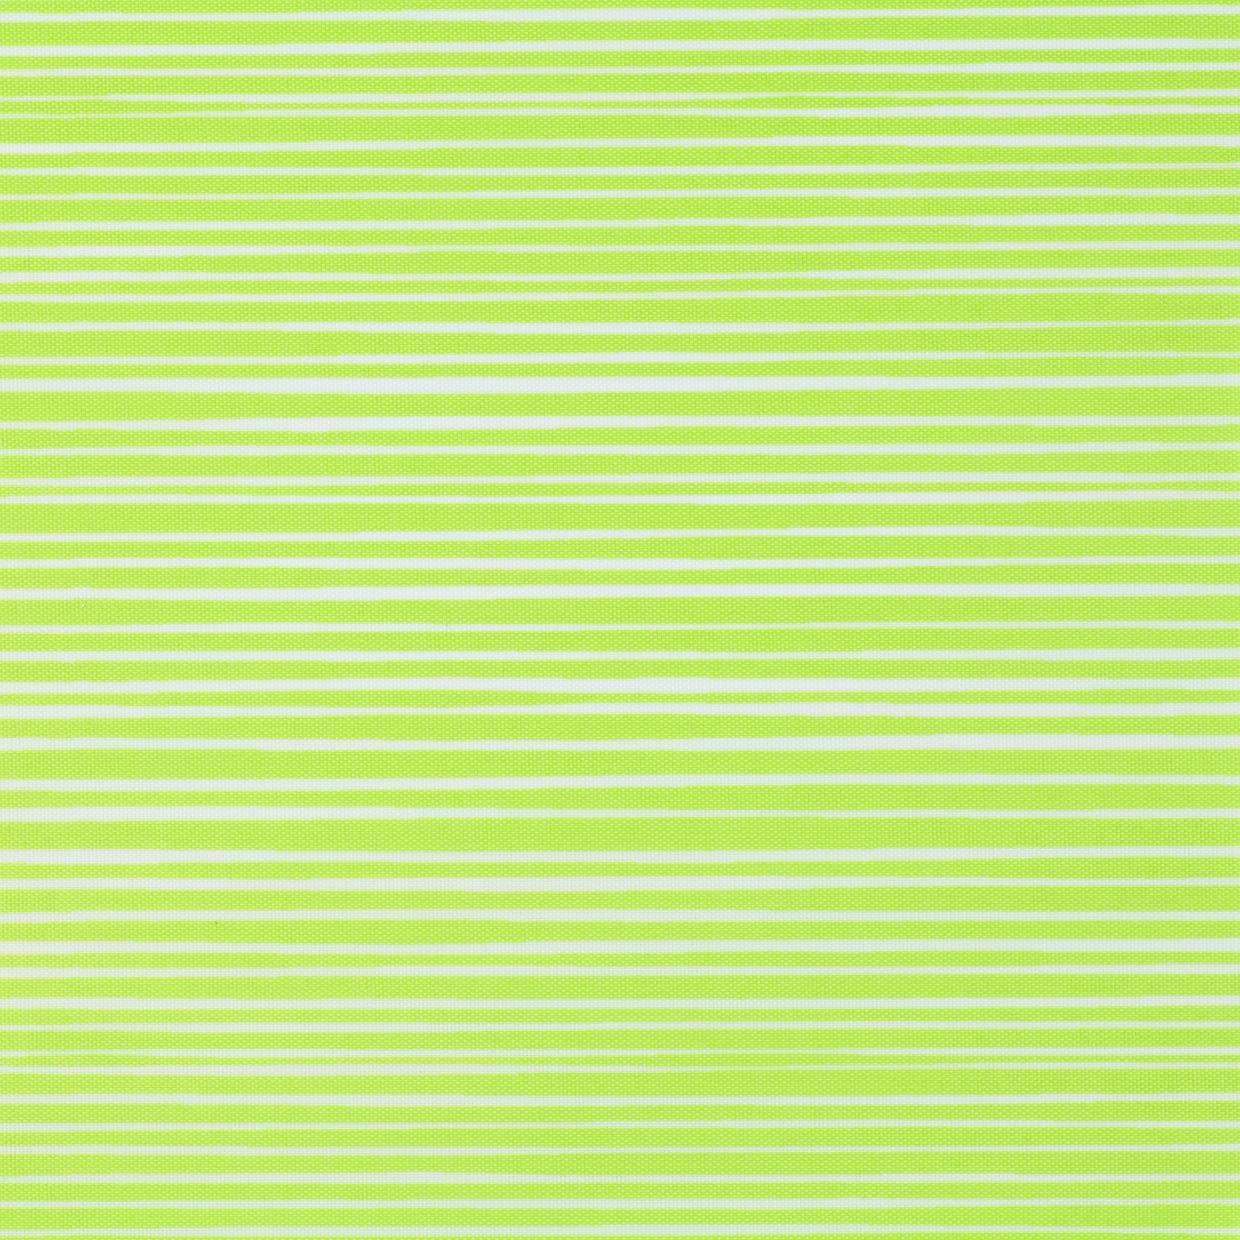 3-R60 Linien-grün